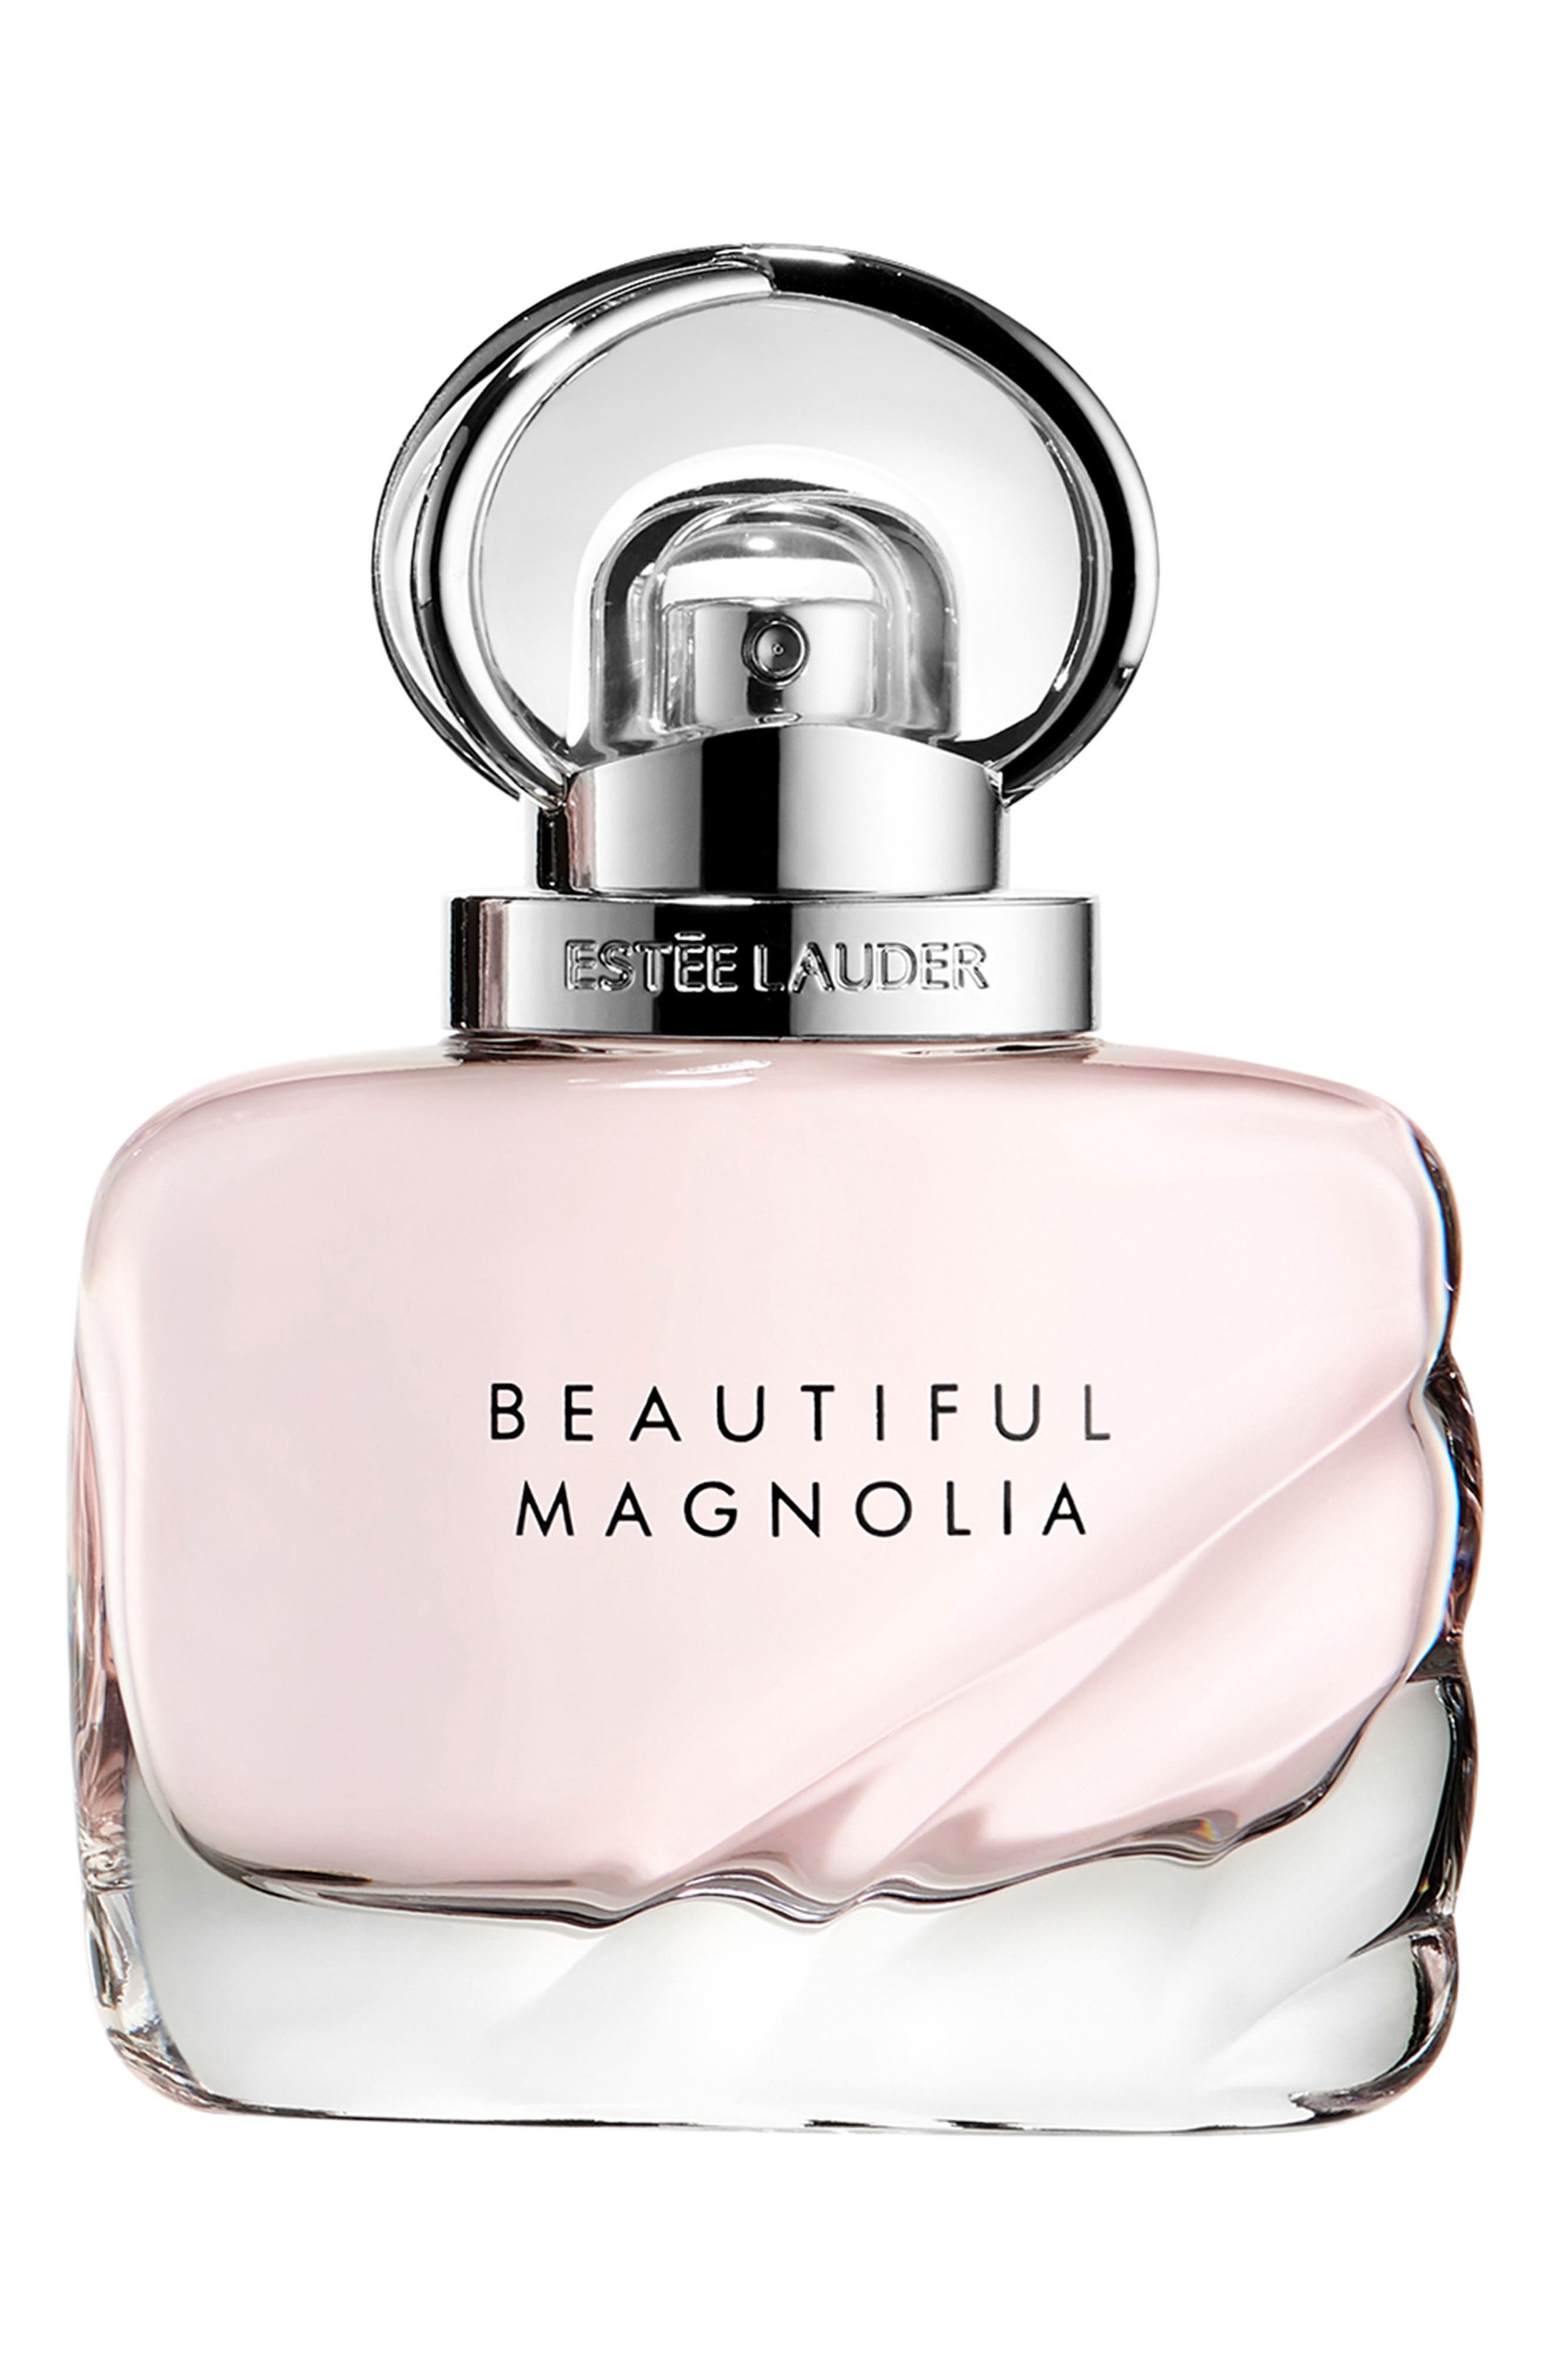 Estee Lauder Beautiful Magnolia Eau de Parfum Spray, 1 oz / 30 ml